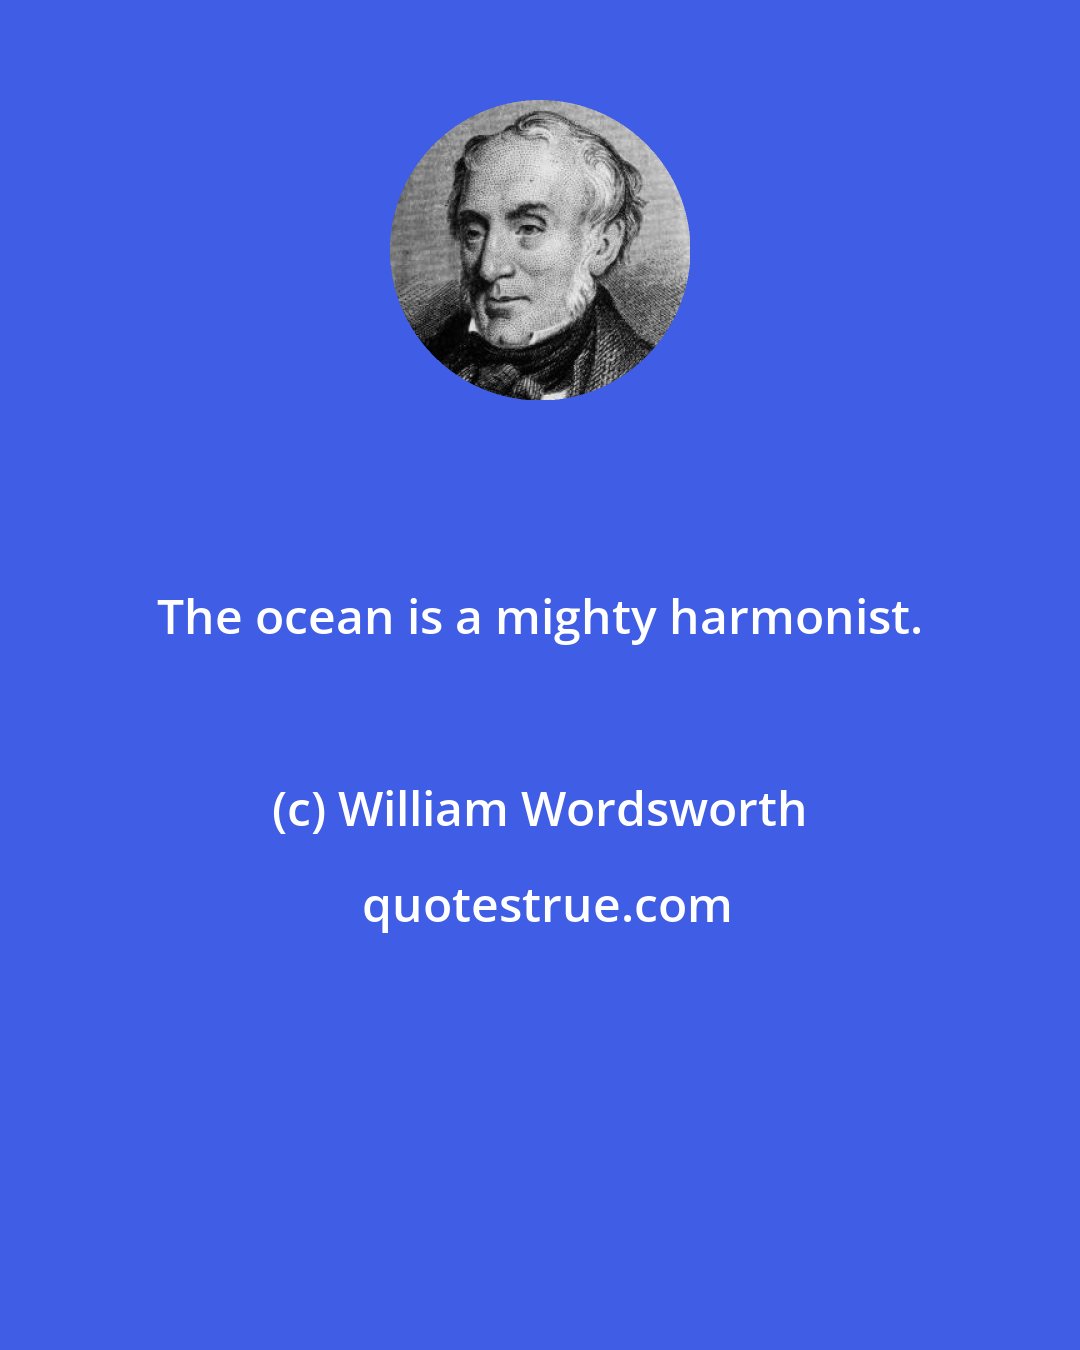 William Wordsworth: The ocean is a mighty harmonist.